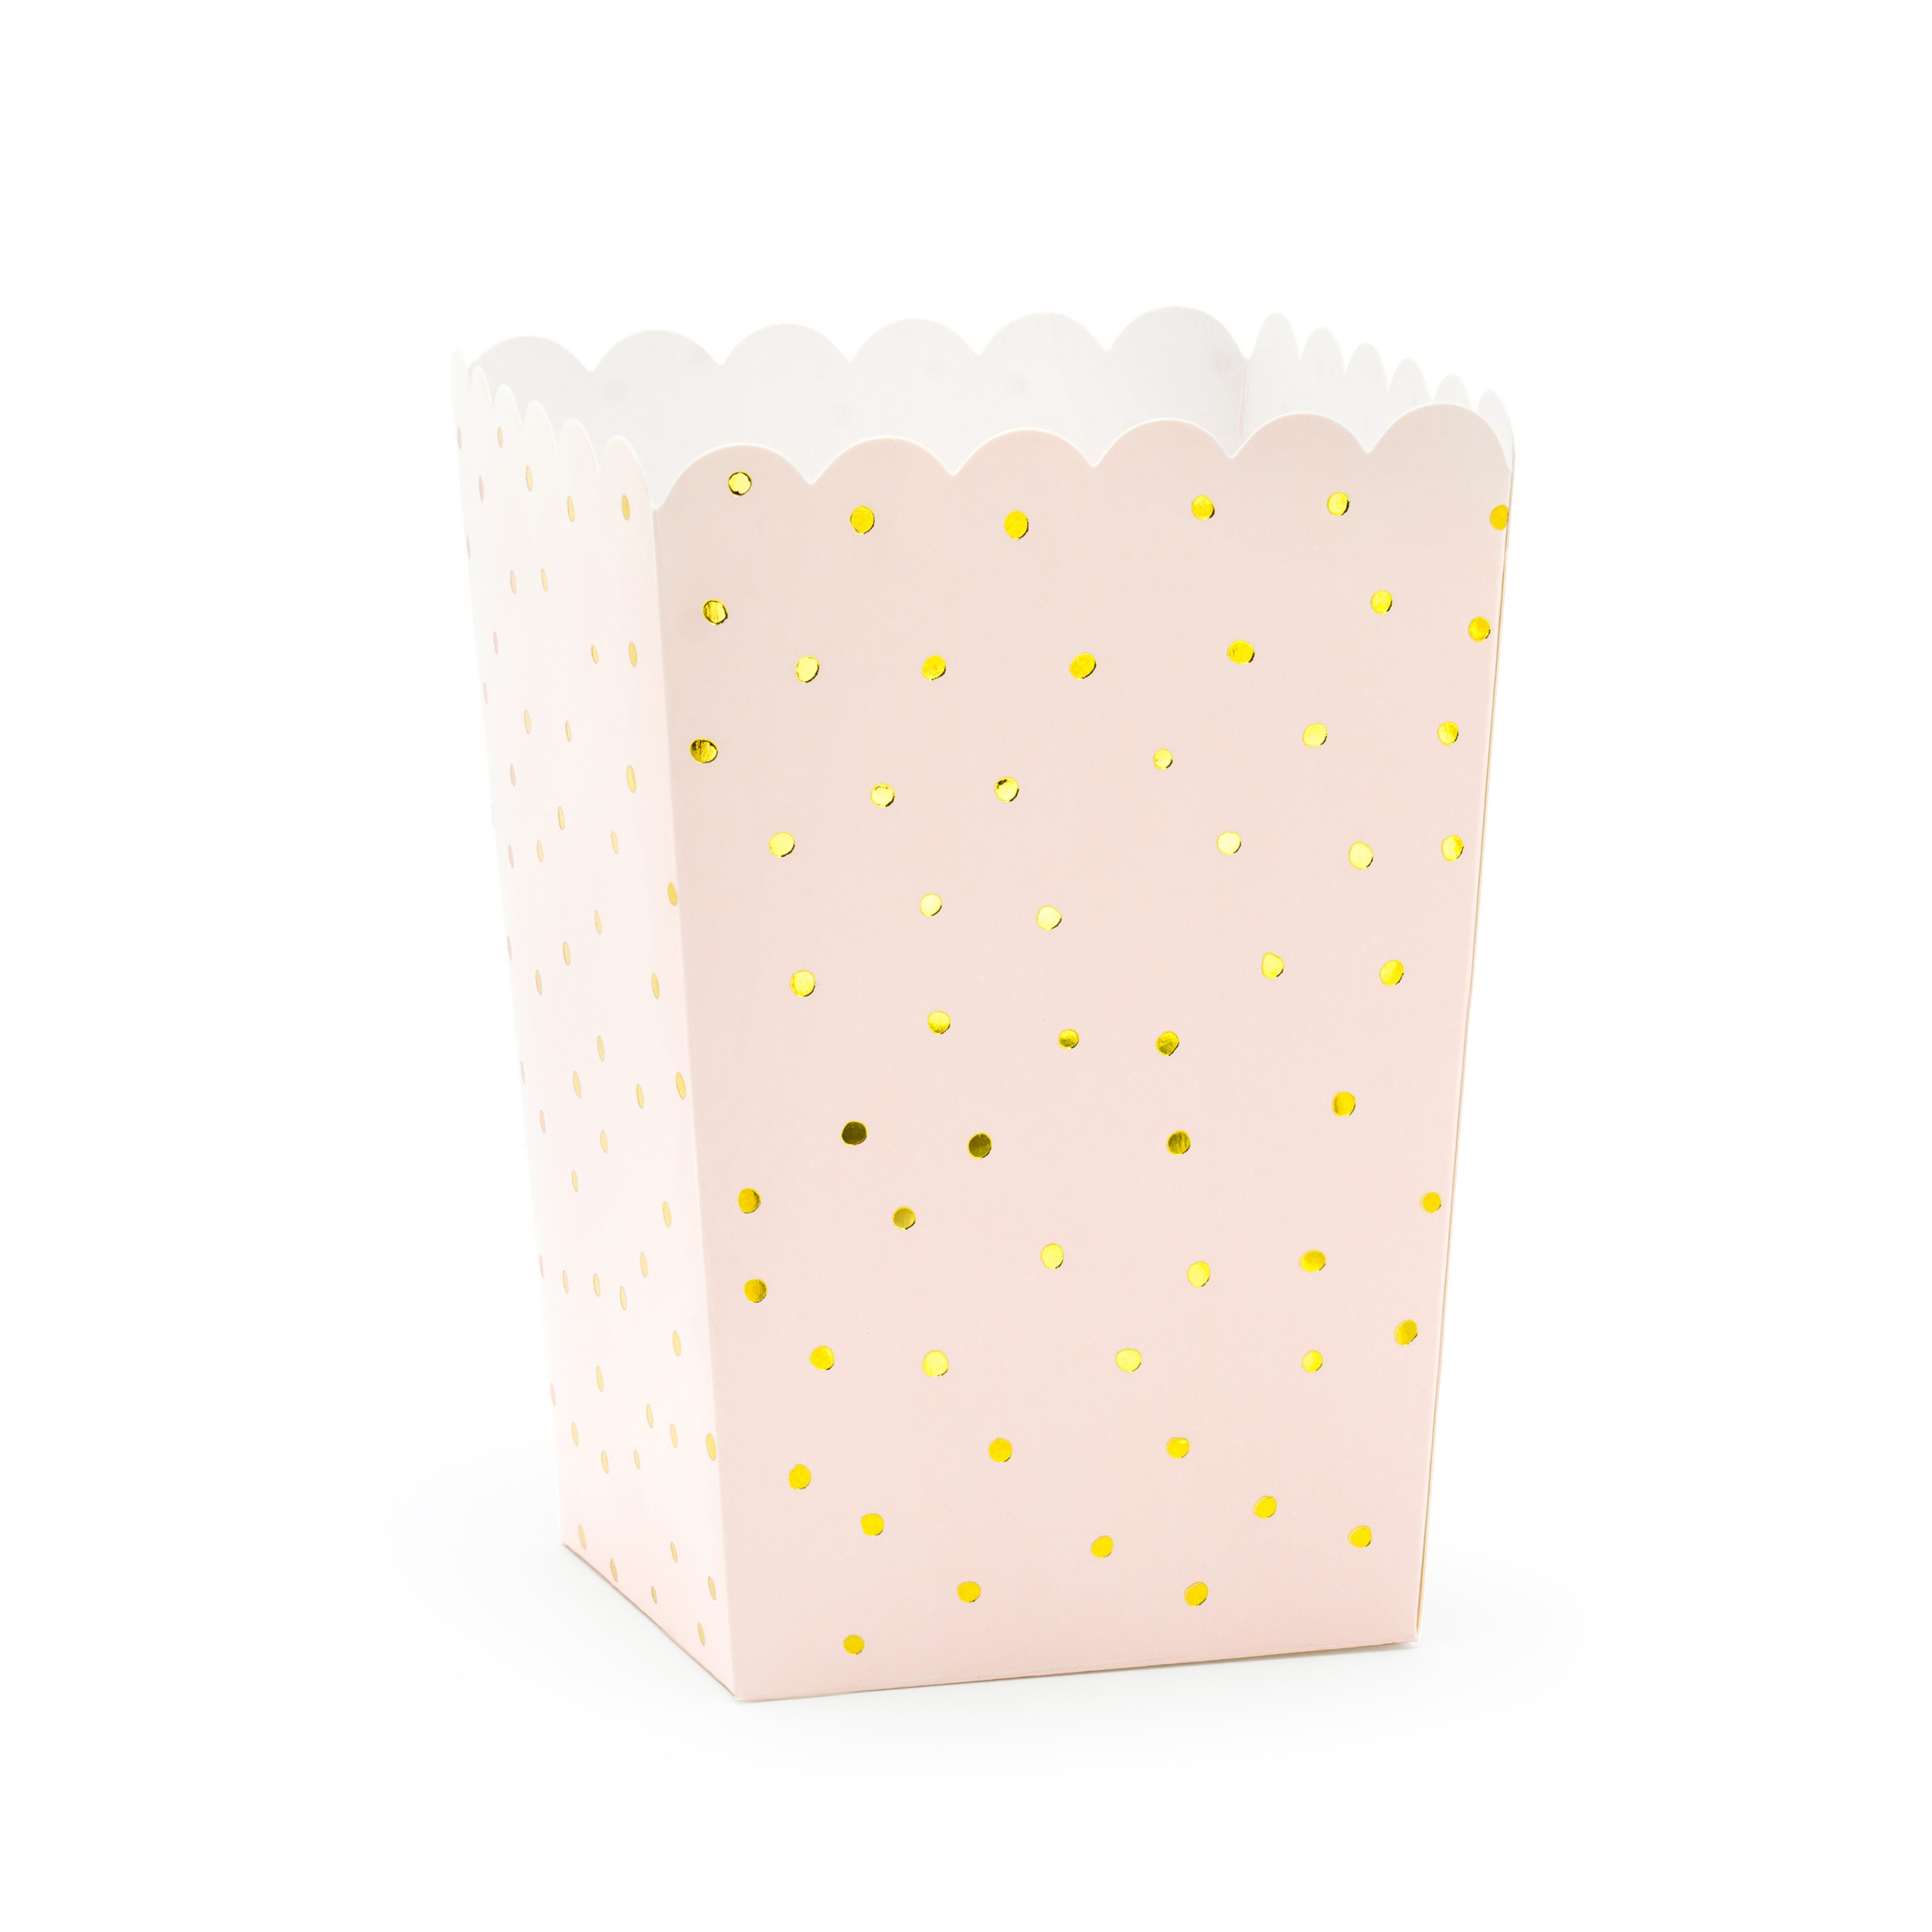 Popcorn-snoep bakjes 6x roze-goud stippen karton 7 x 7 x 12 cm feest uitdeel bakjes